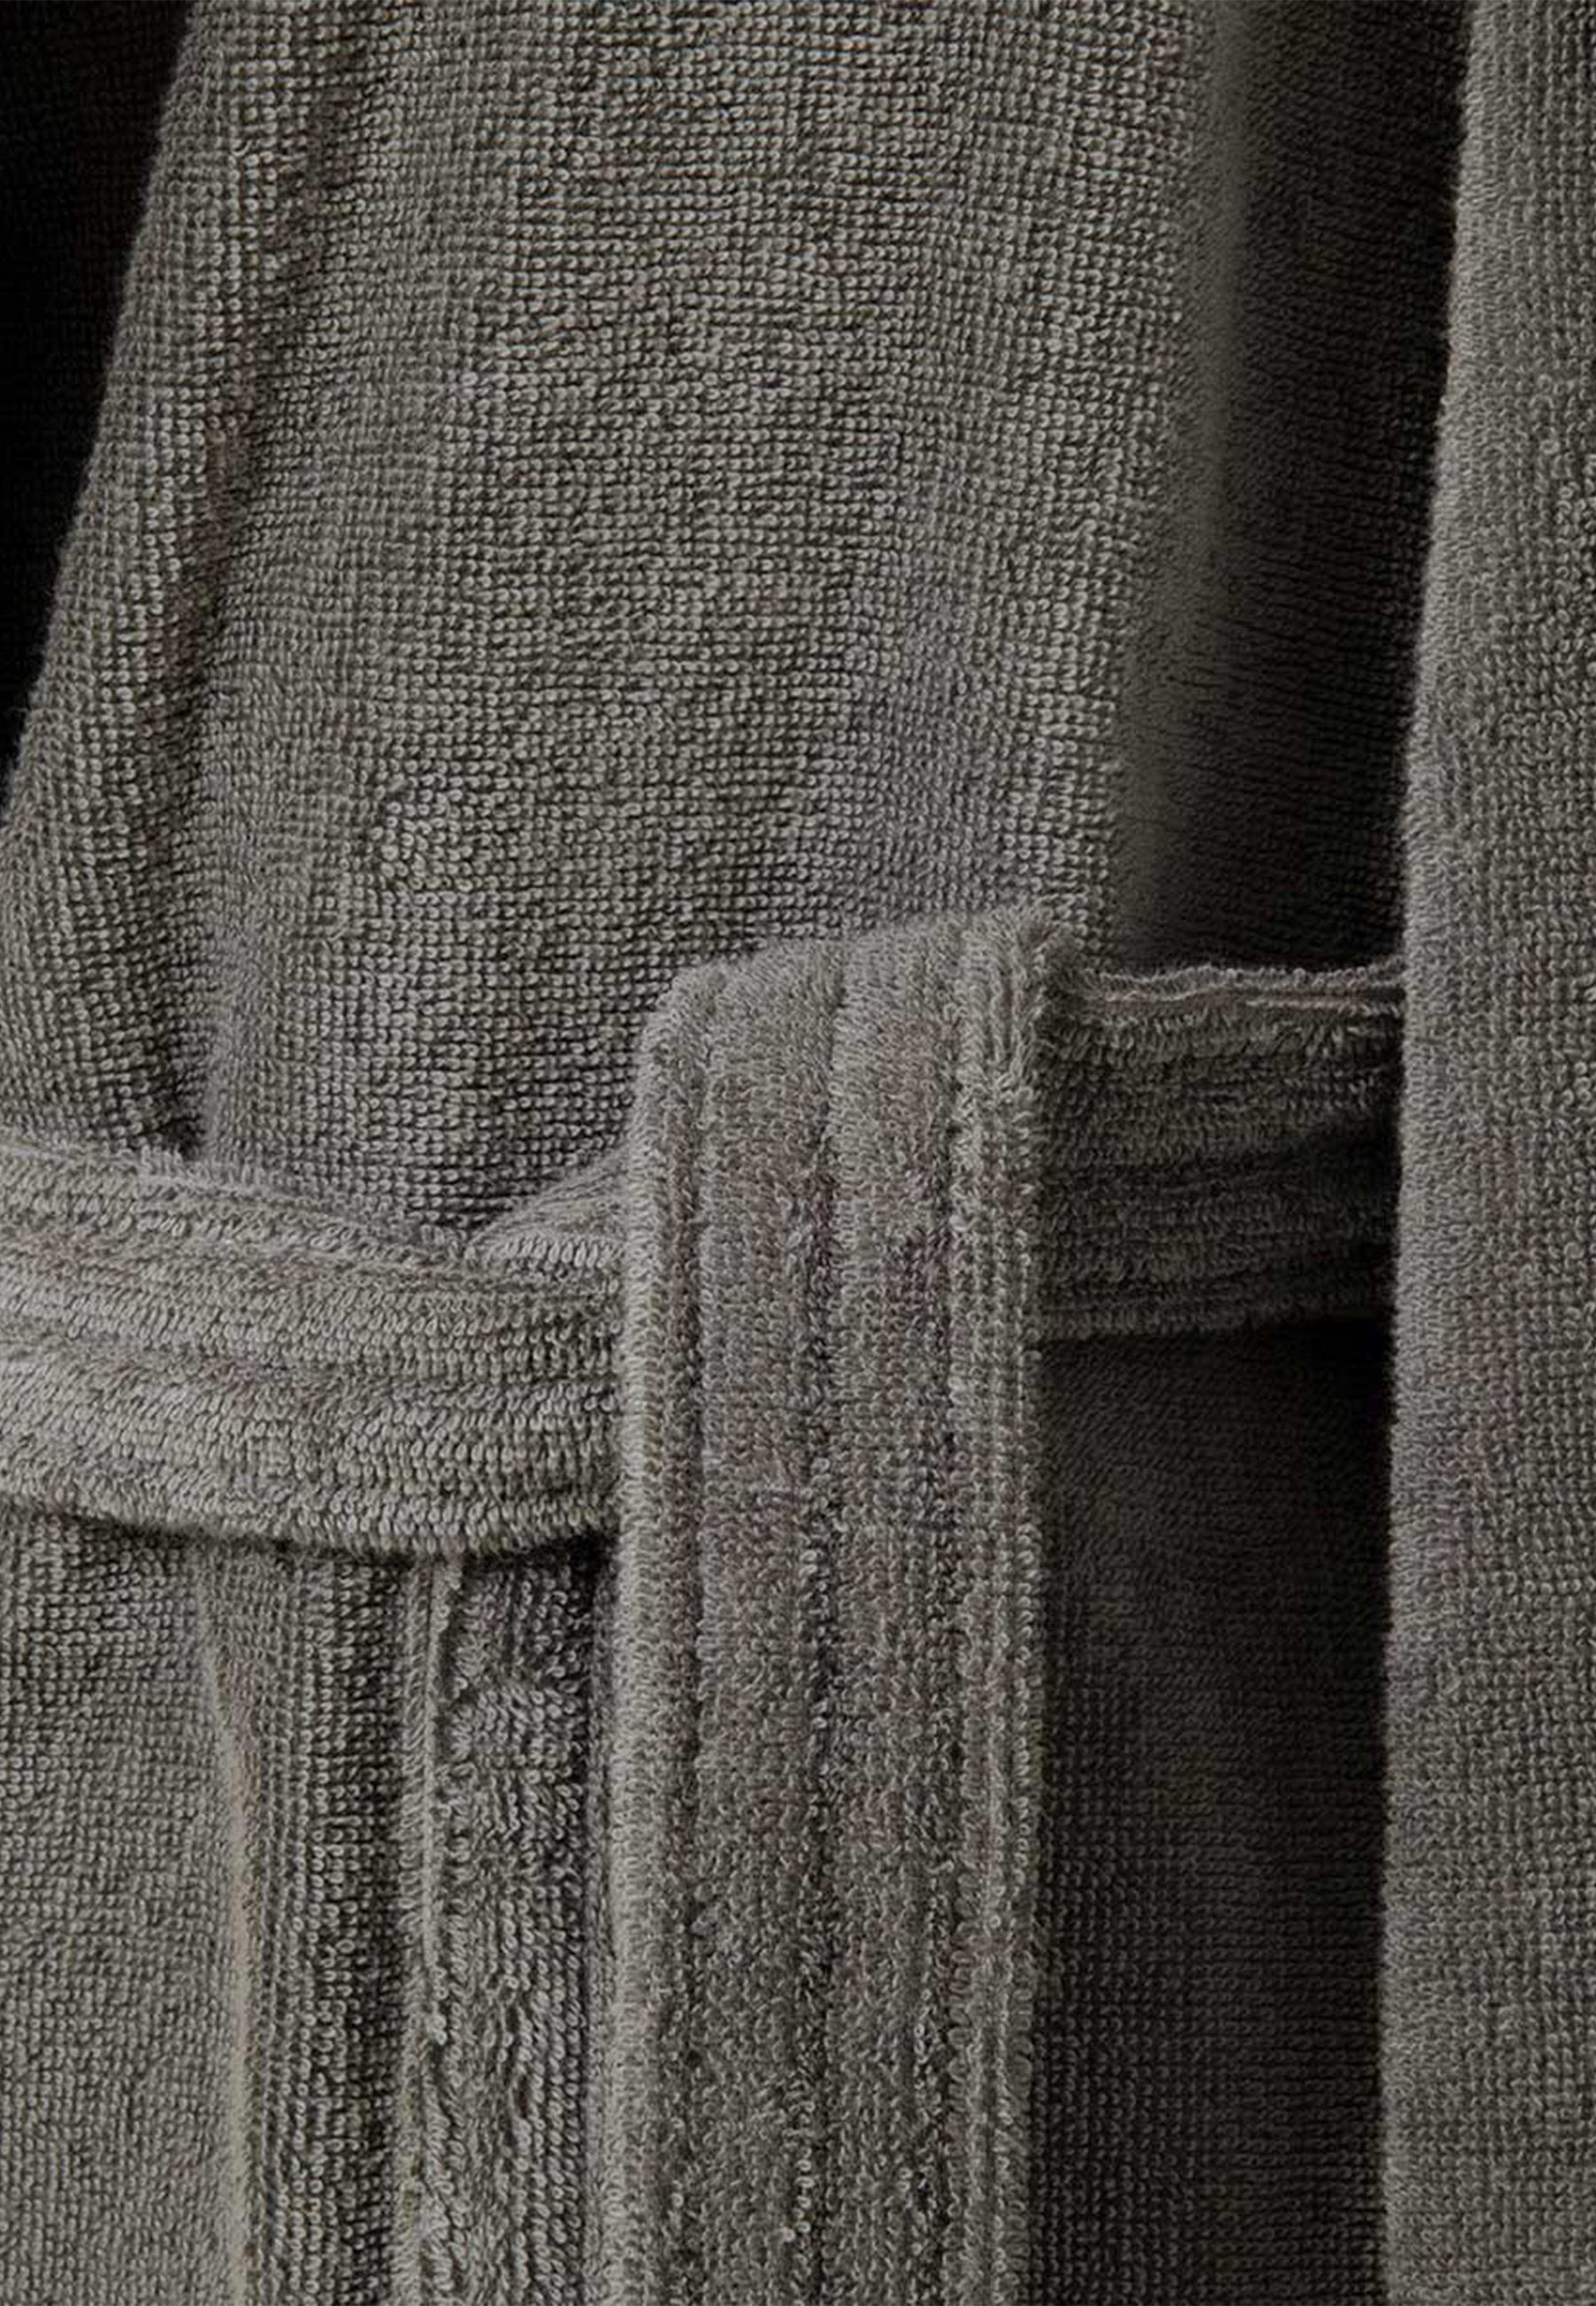 modernem Bademantel KENZO mit Baumwolle, Design grau K MAISON 100% Iconic,